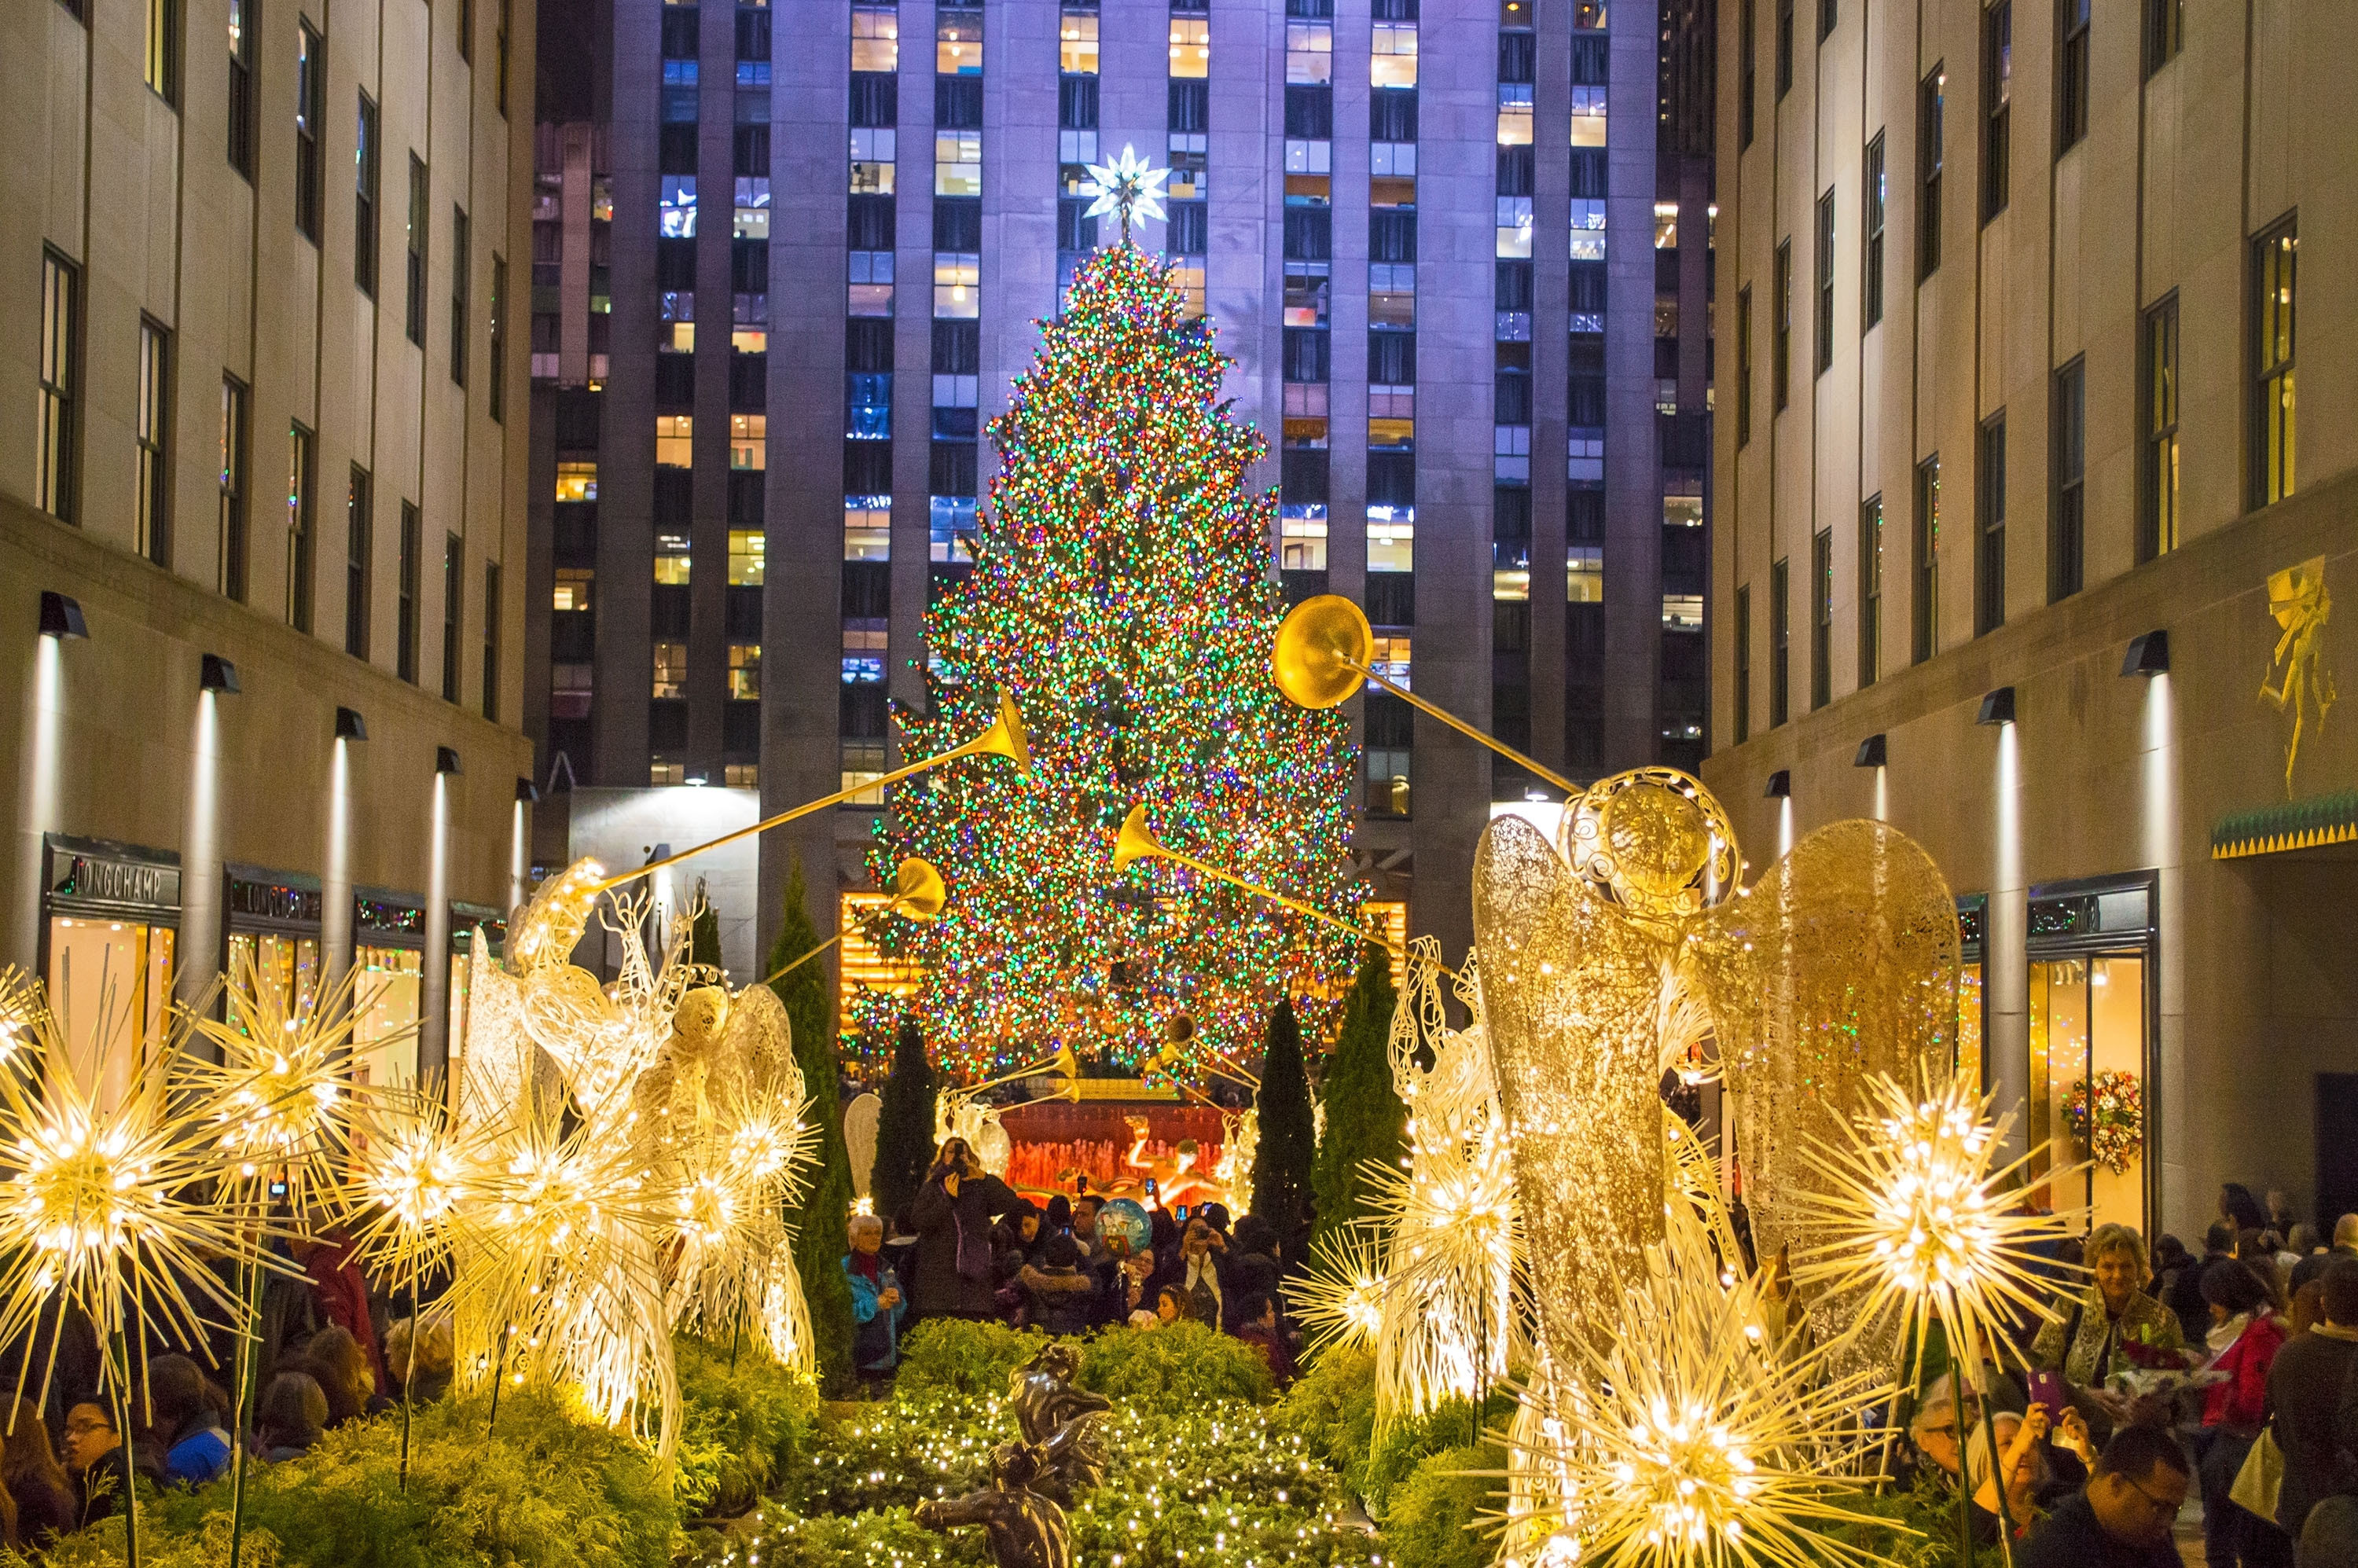 Rockefeller Christmas Tree Lighting
 When is the 2014 Rockefeller Center Christmas Tree